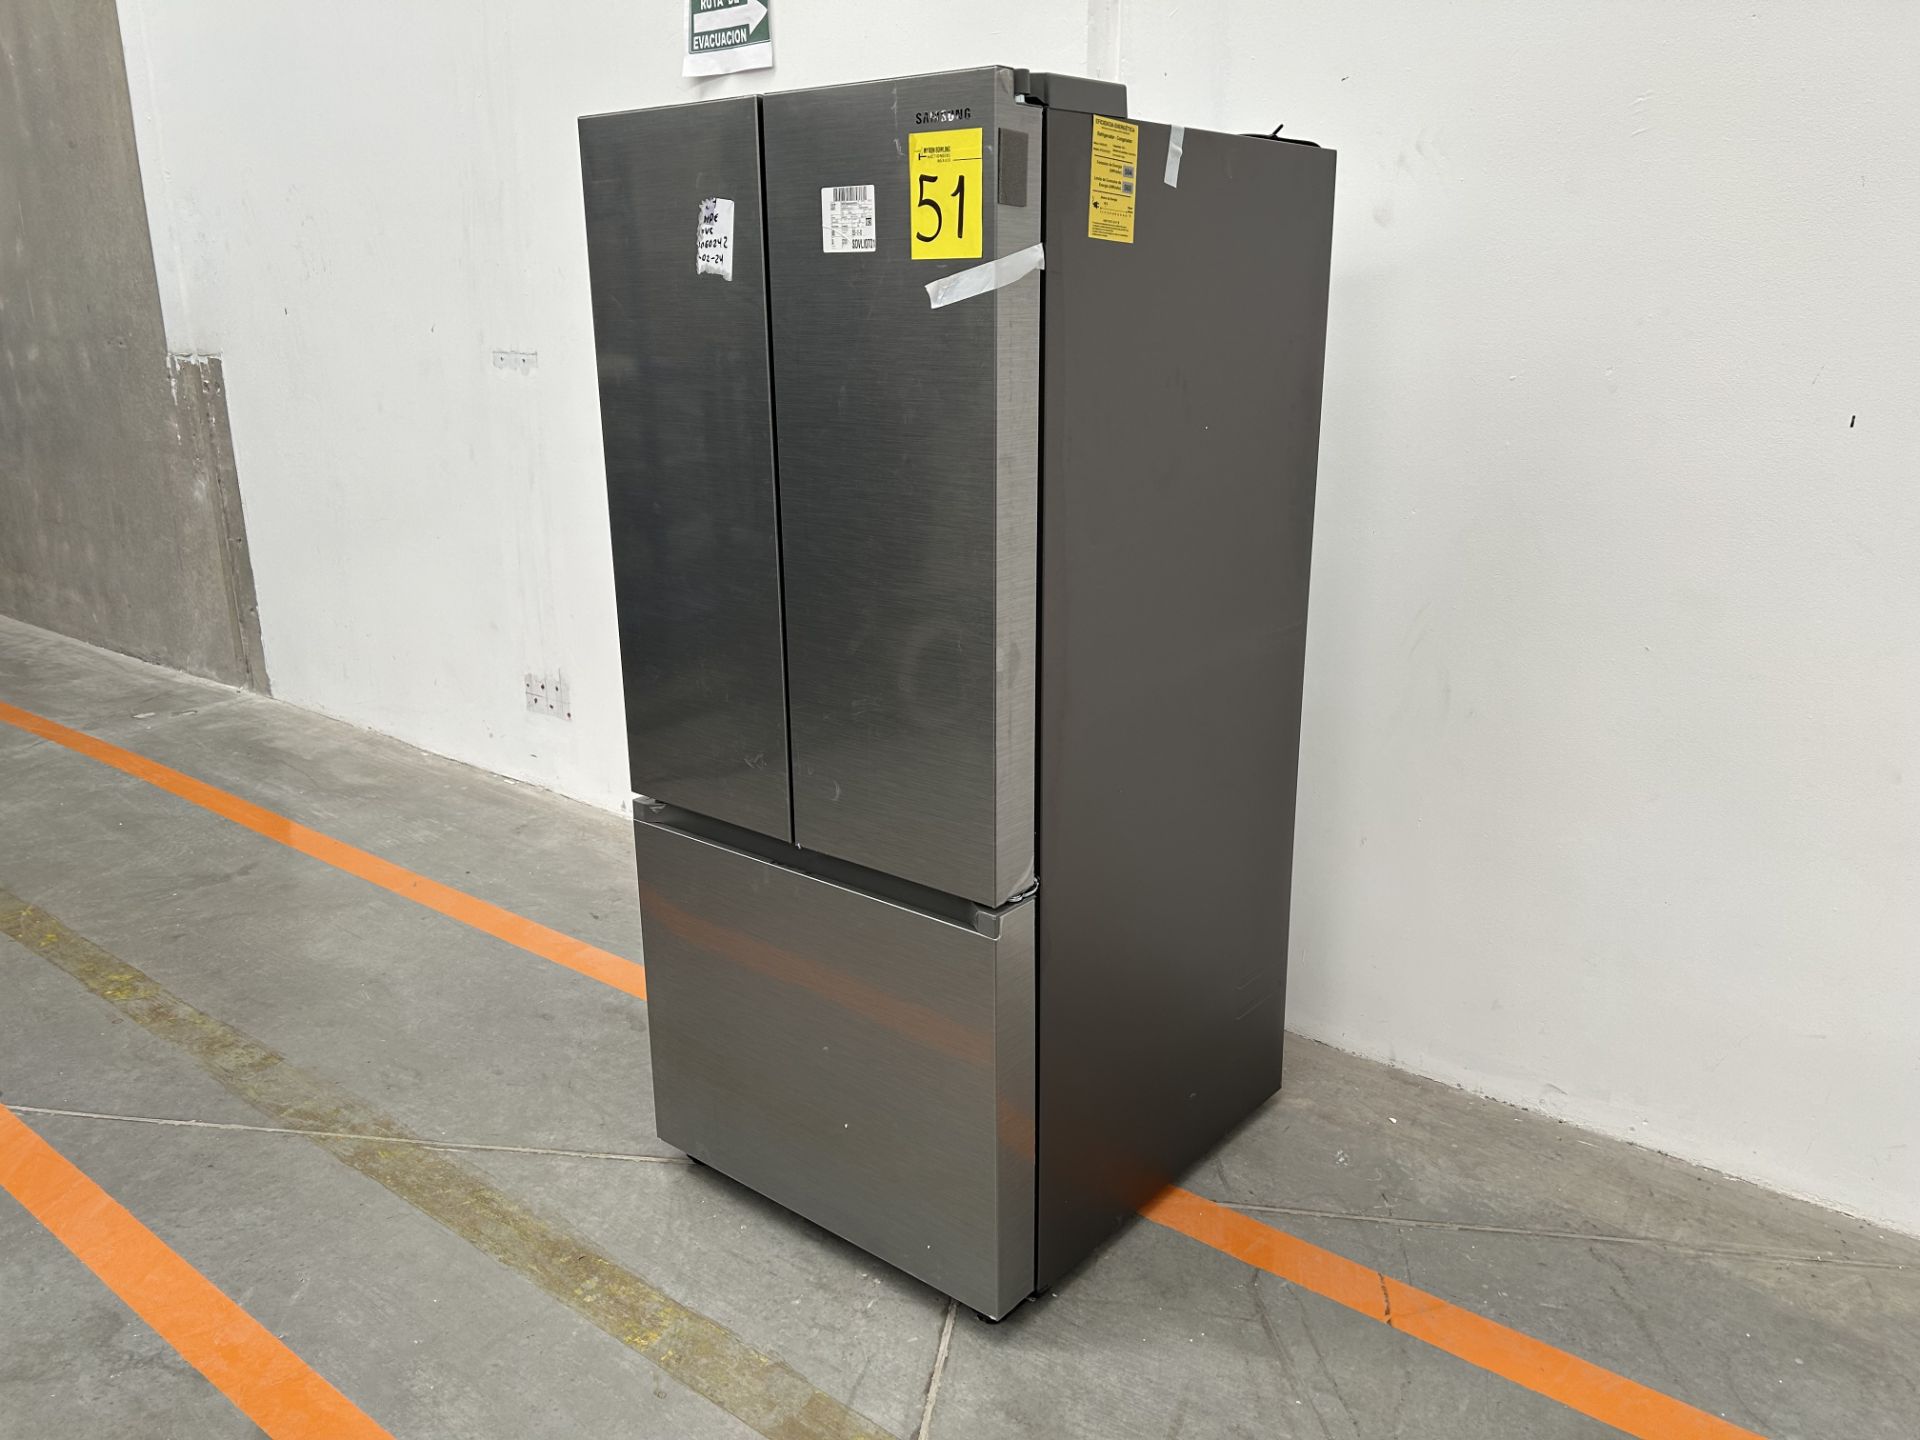 (NUEVO) Refrigerador Marca SAMSUNG, Modelo RF22A410S9, Serie 0016K, Color GRIS - Image 2 of 4